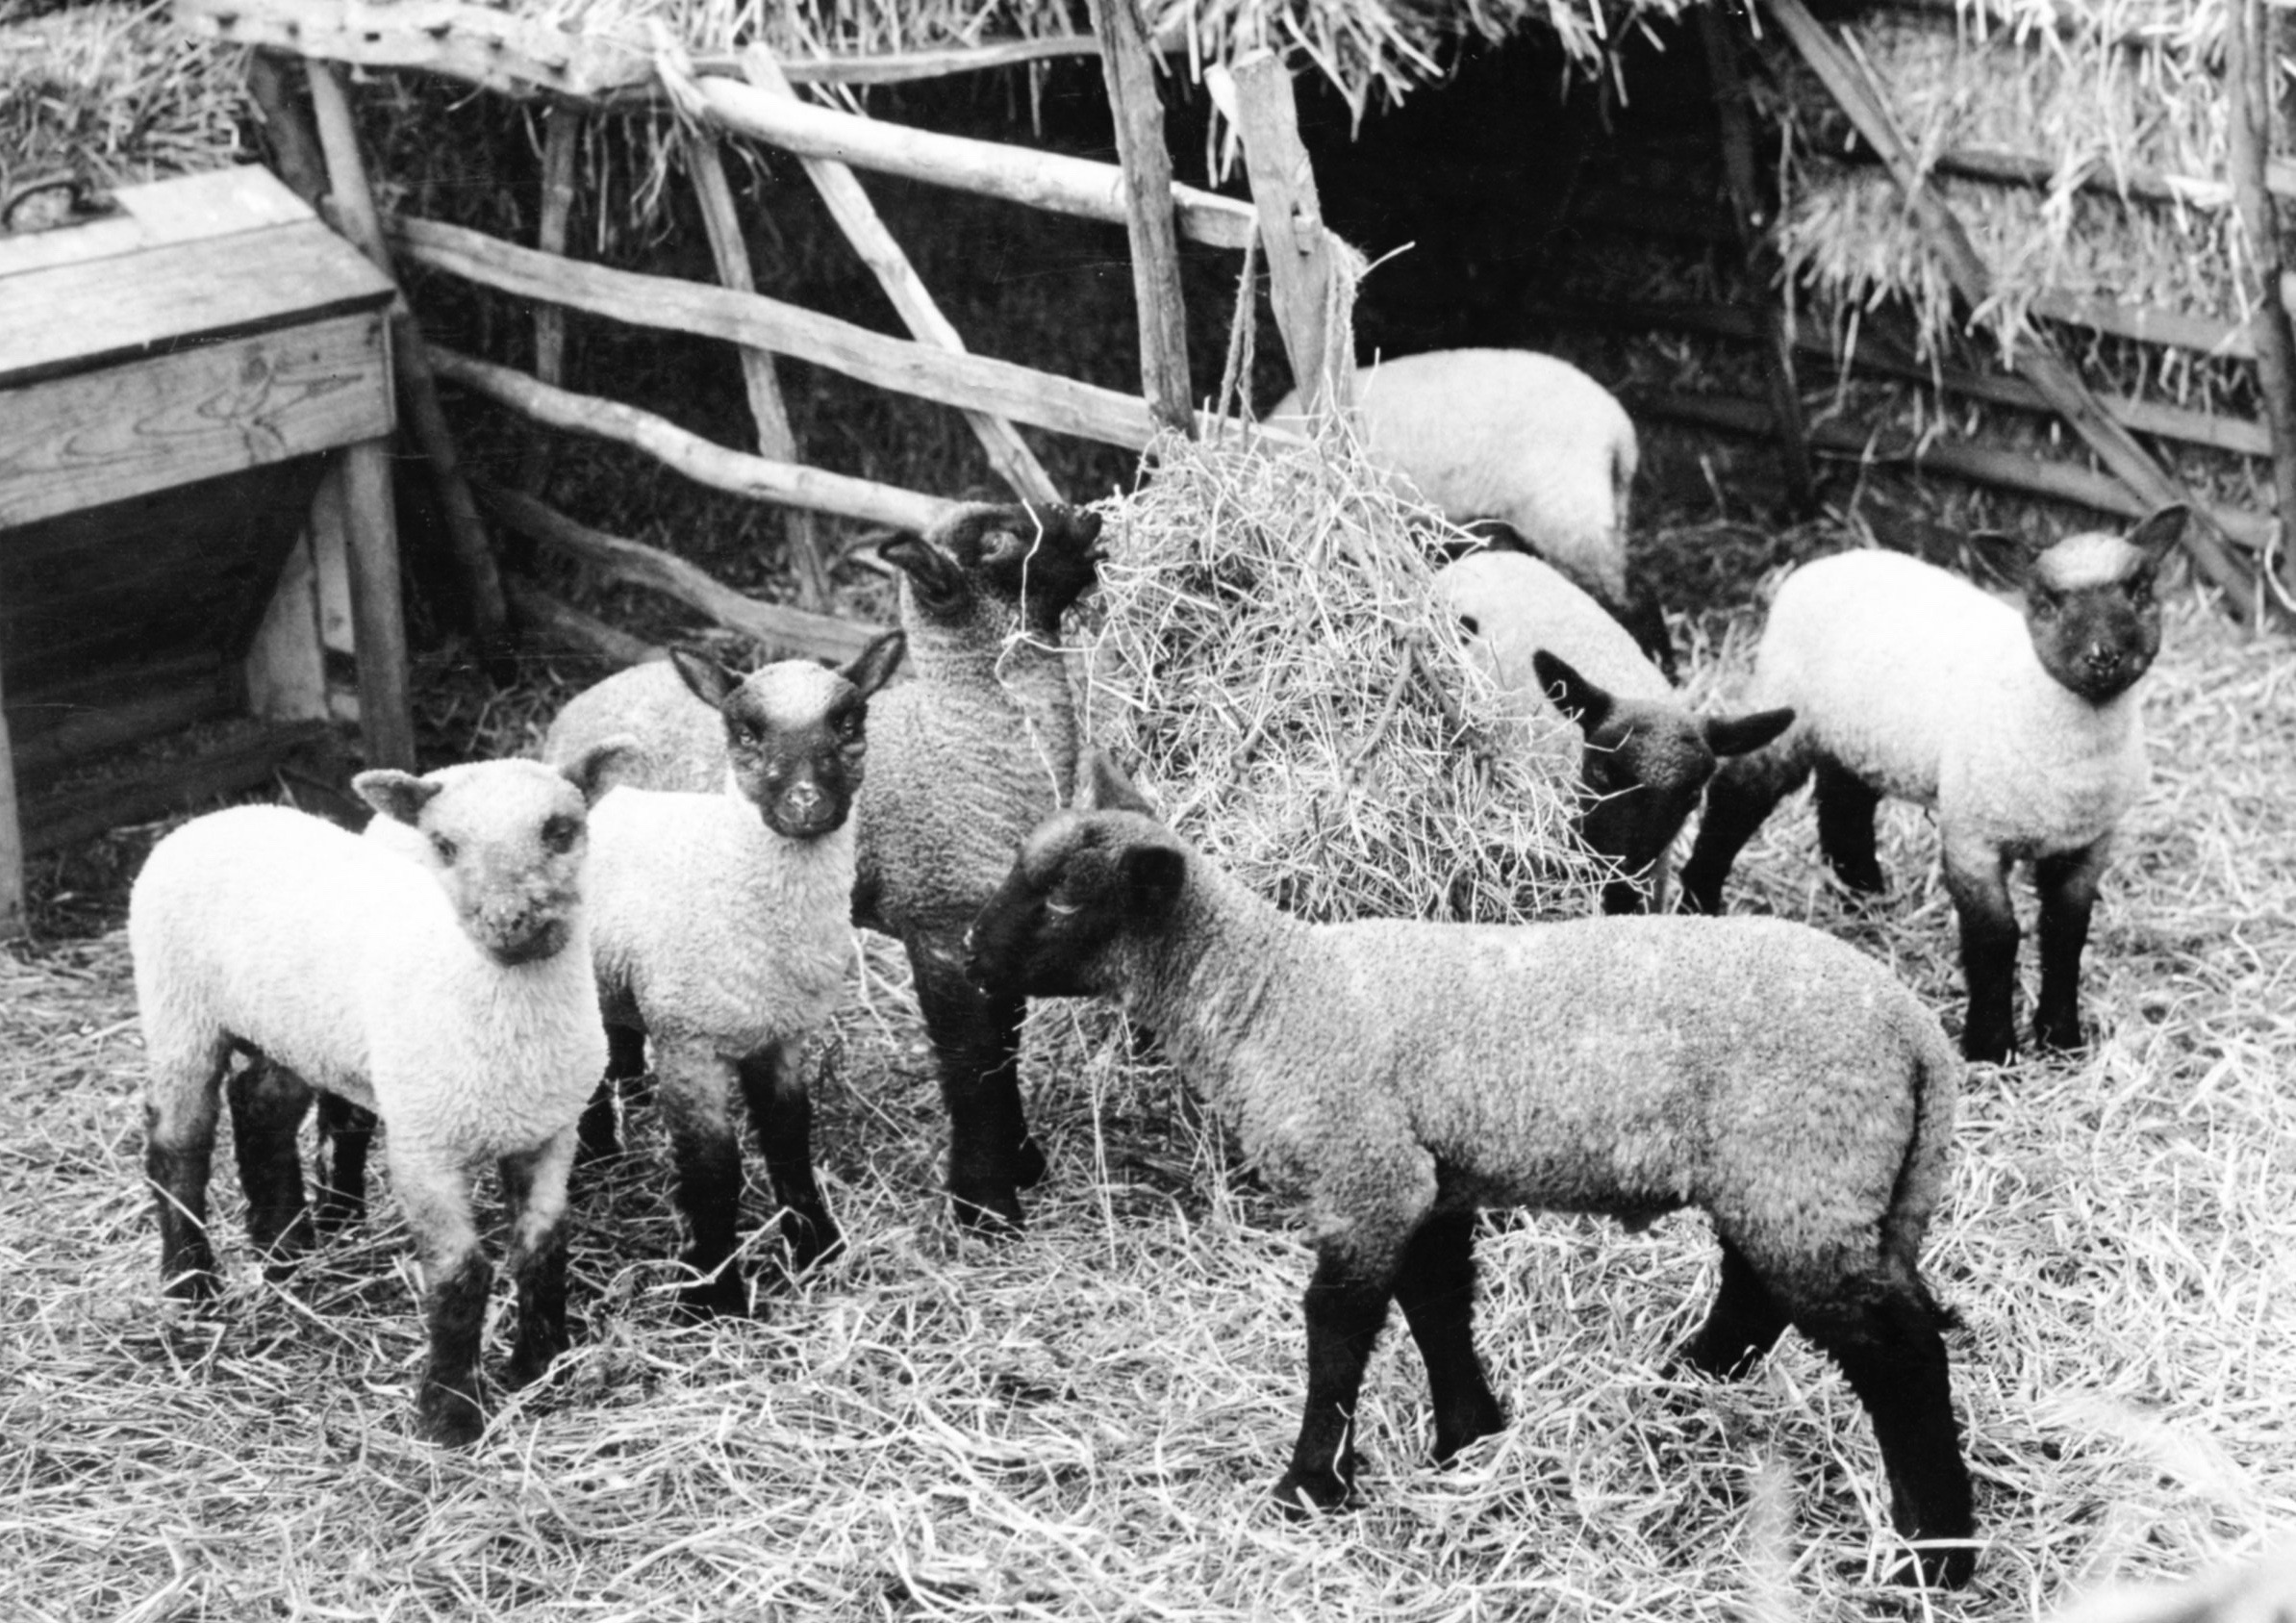 Suffolk lambs at Lackford in 1958